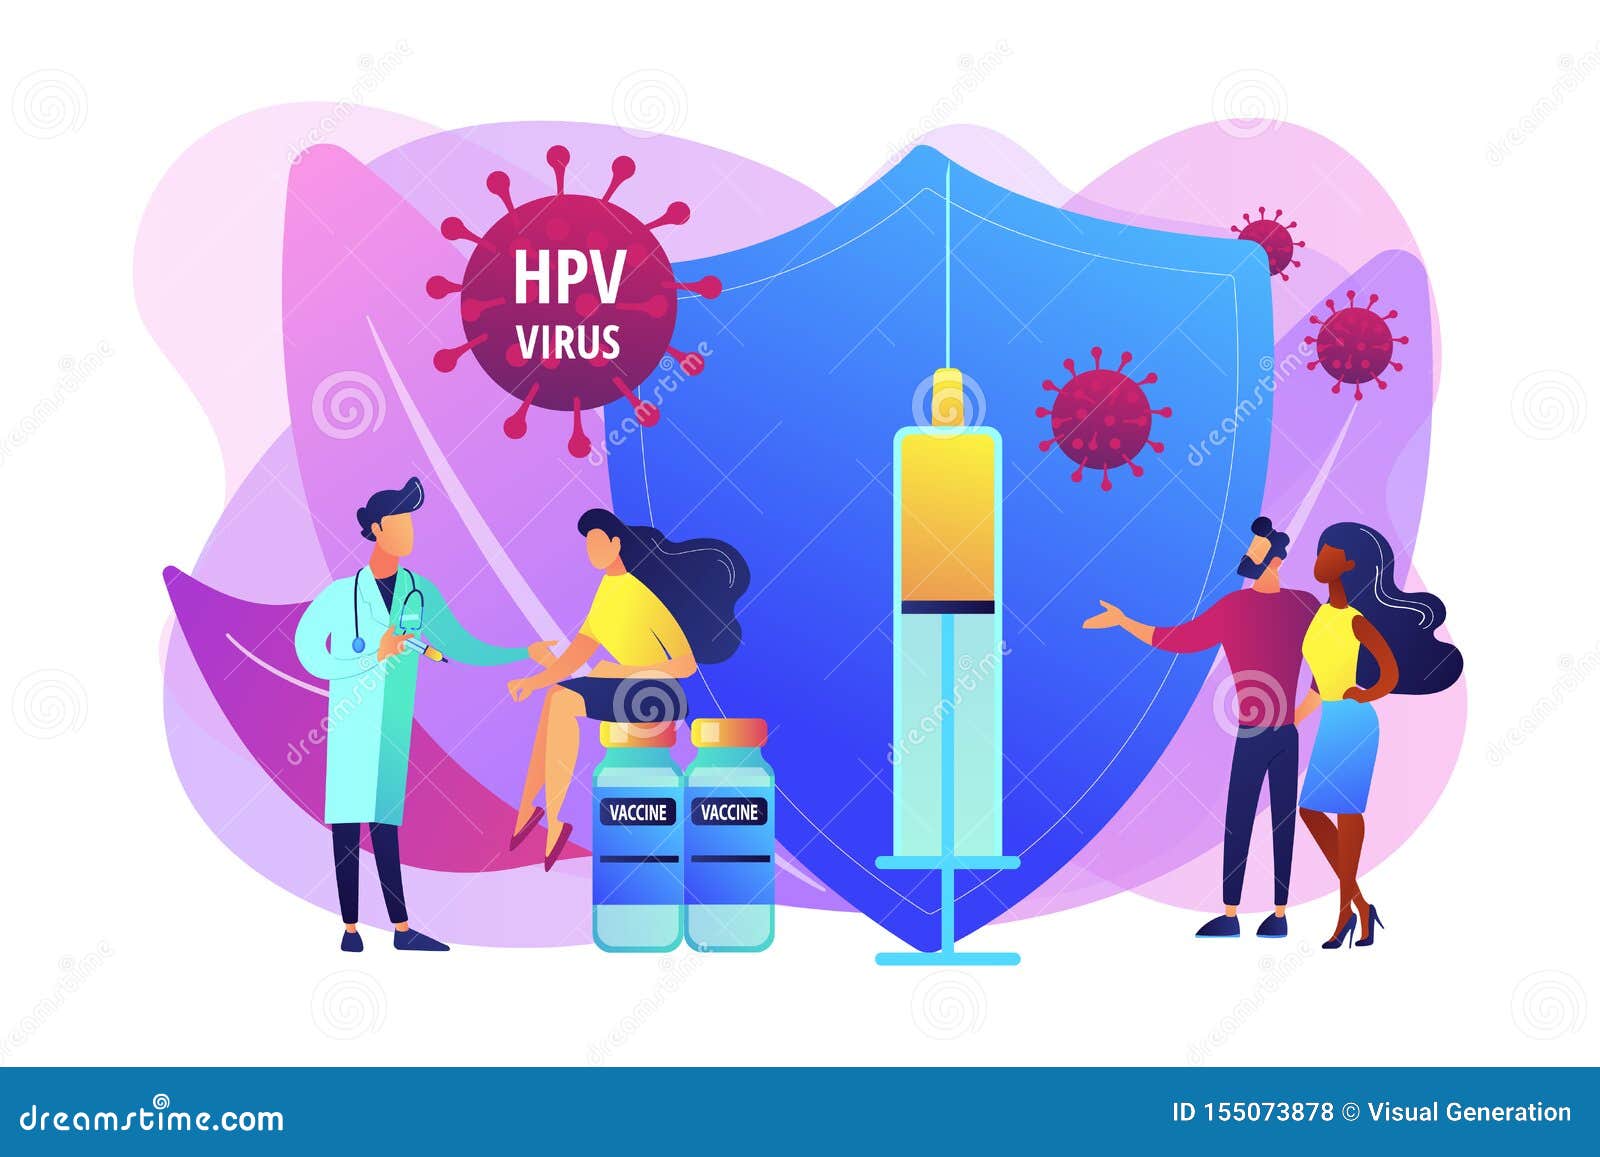 hpv virus symptoms mouth